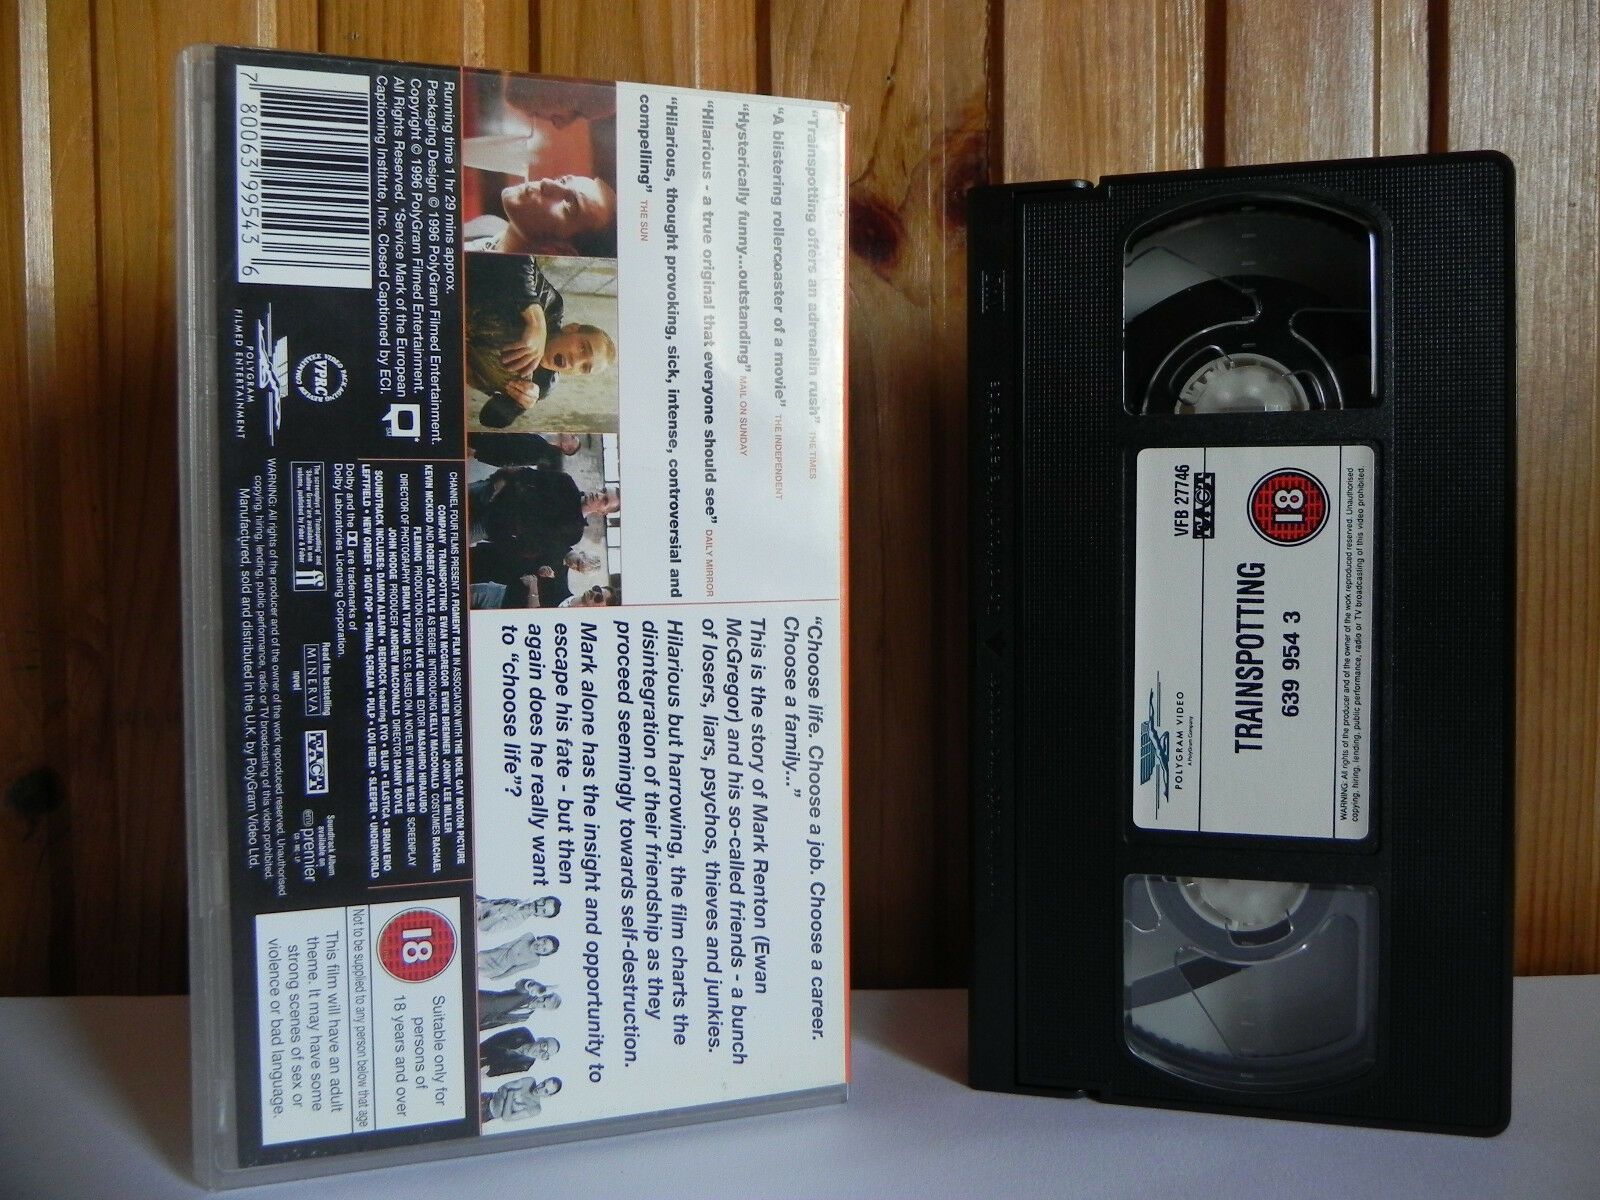 Trainspotting - Orange Sleeve - PolyGram - Cert (18) - Ewan McGregor - Pal VHS-